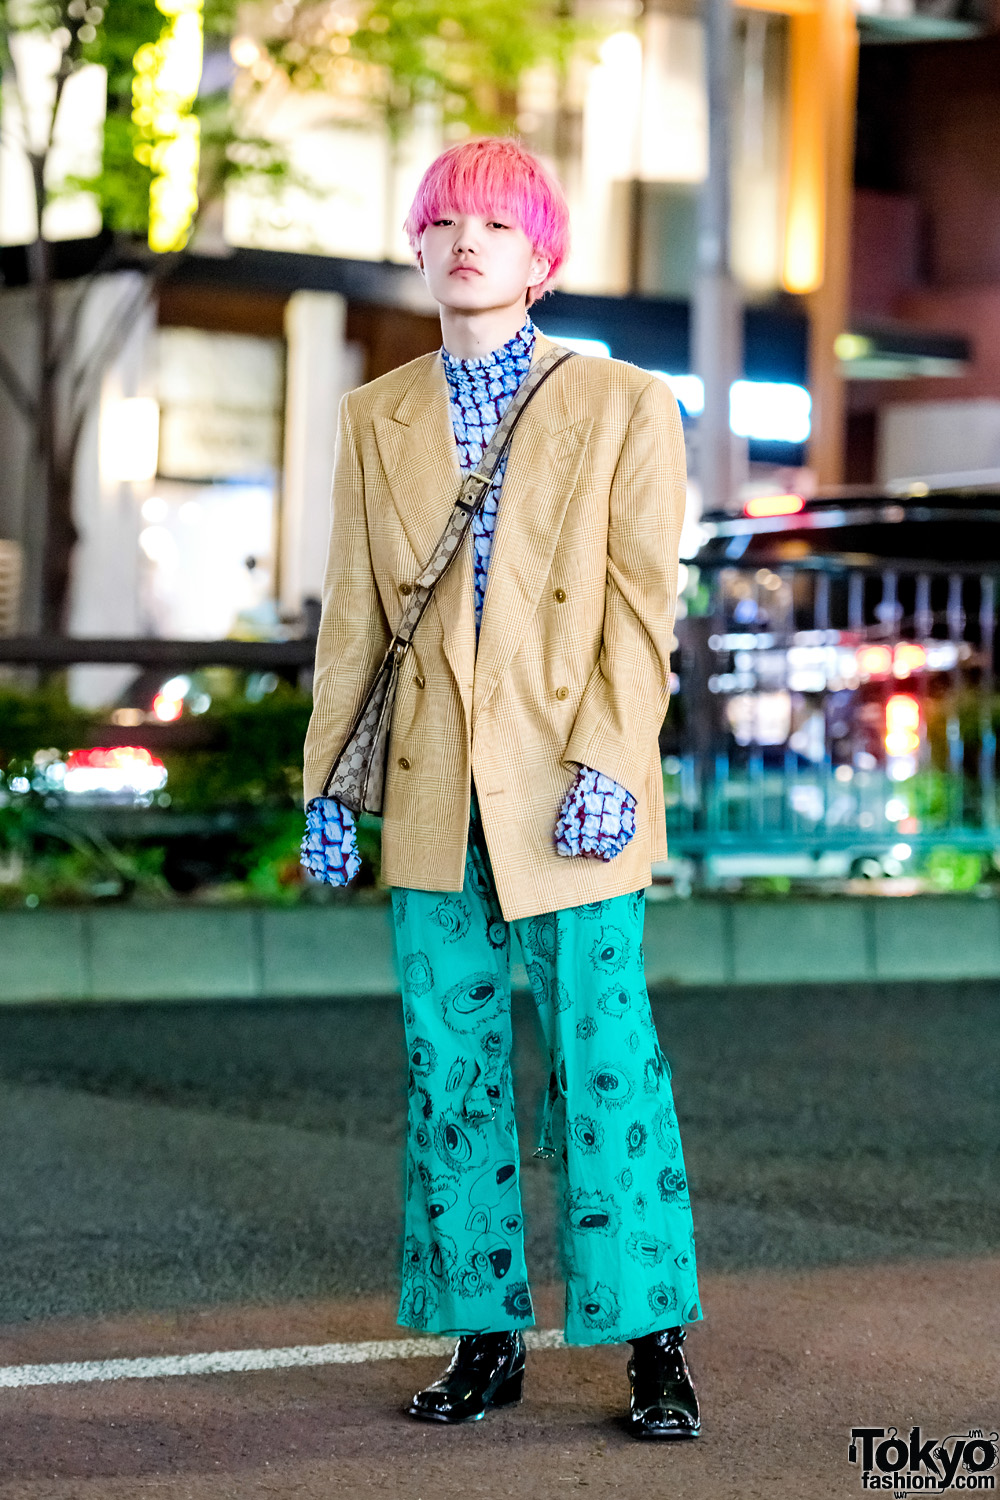 Harajuku Guy w/ Pink Hair & Mixed Prints Street Style w/ Plaid Blazer, Popcorn Top & Gucci Bag